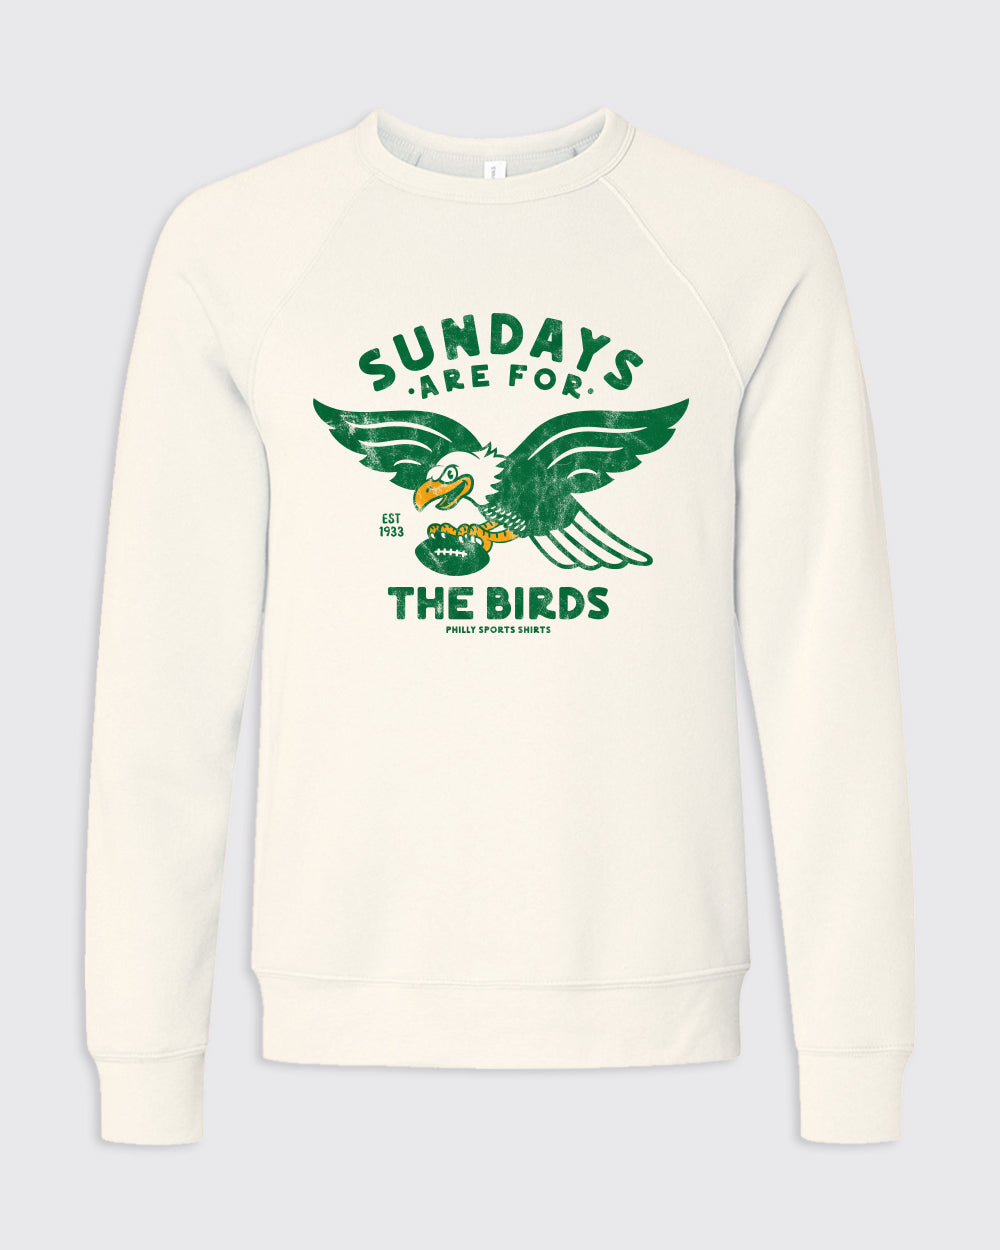 Sundays Are For The Birds Vintage Crewneck - Crewnecks, Eagles - Philly Sports Shirts